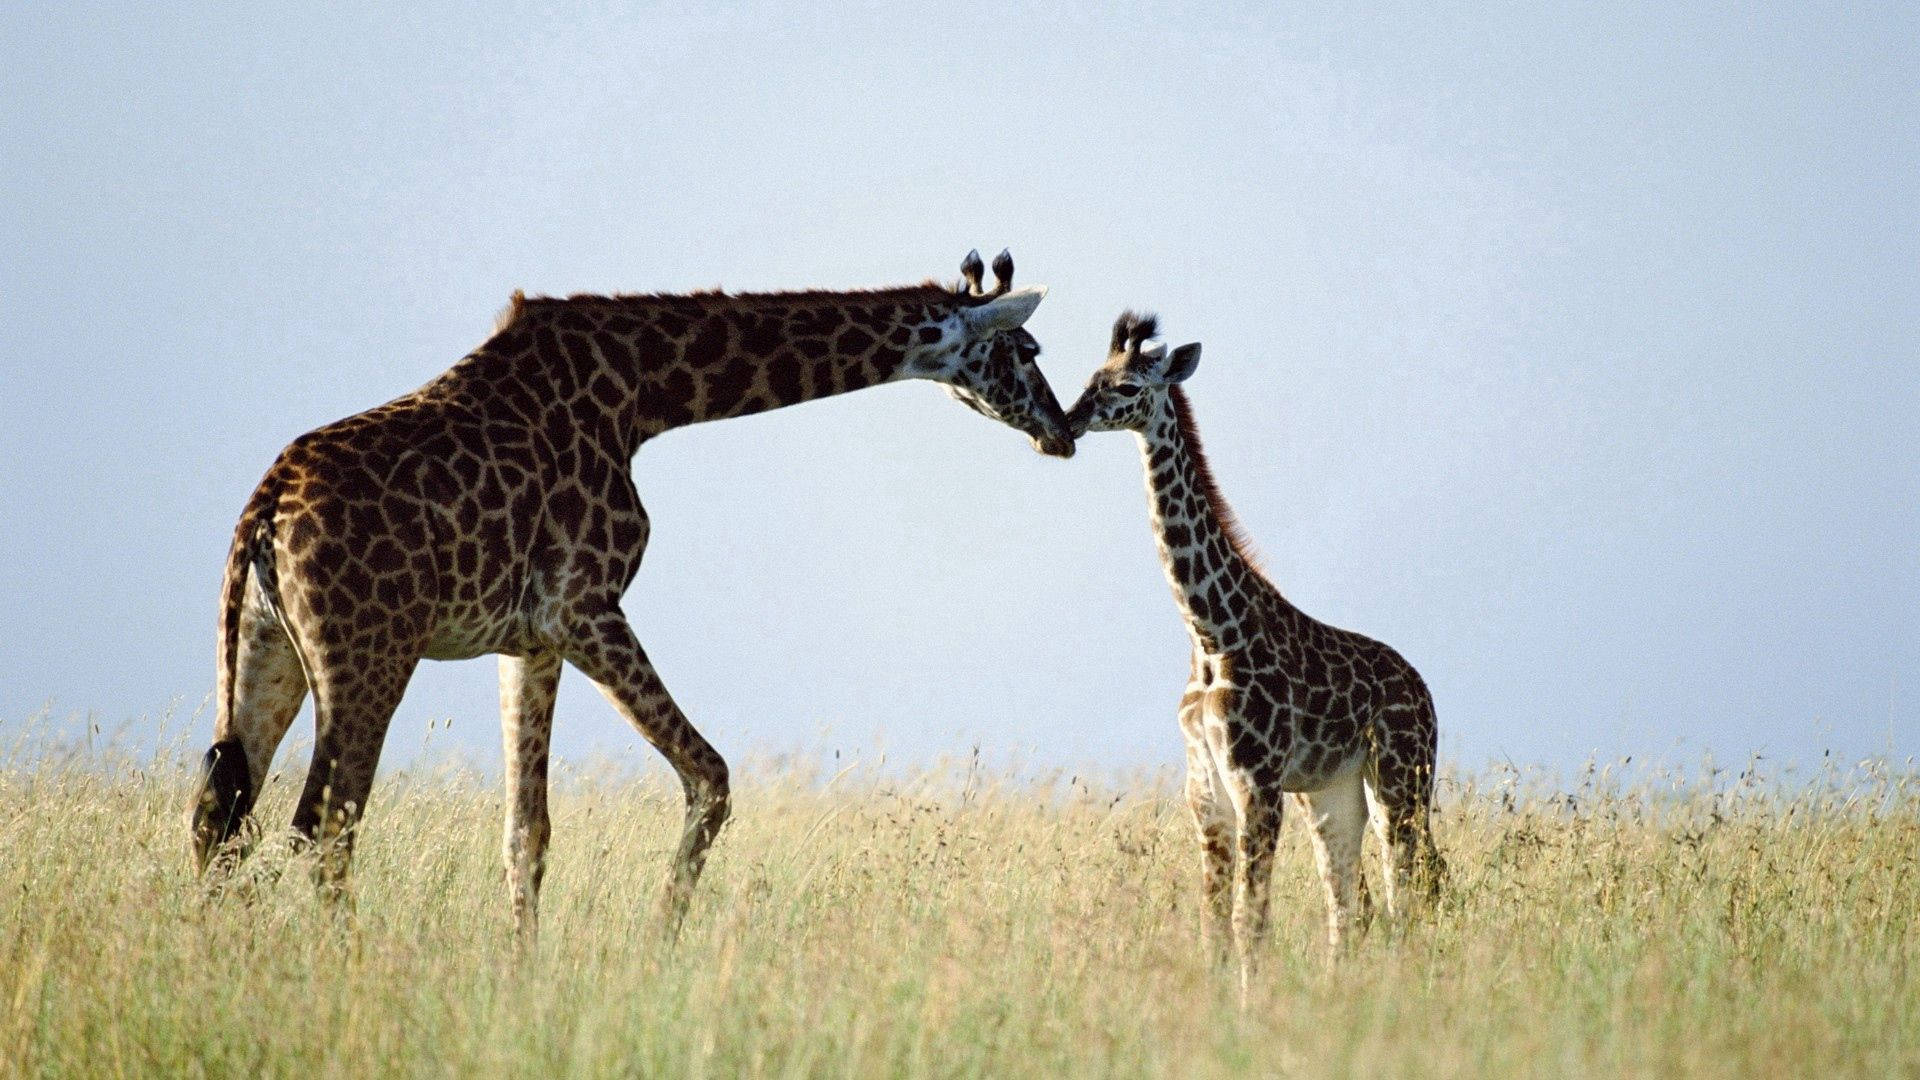 Giraffe Family In Grassland Background